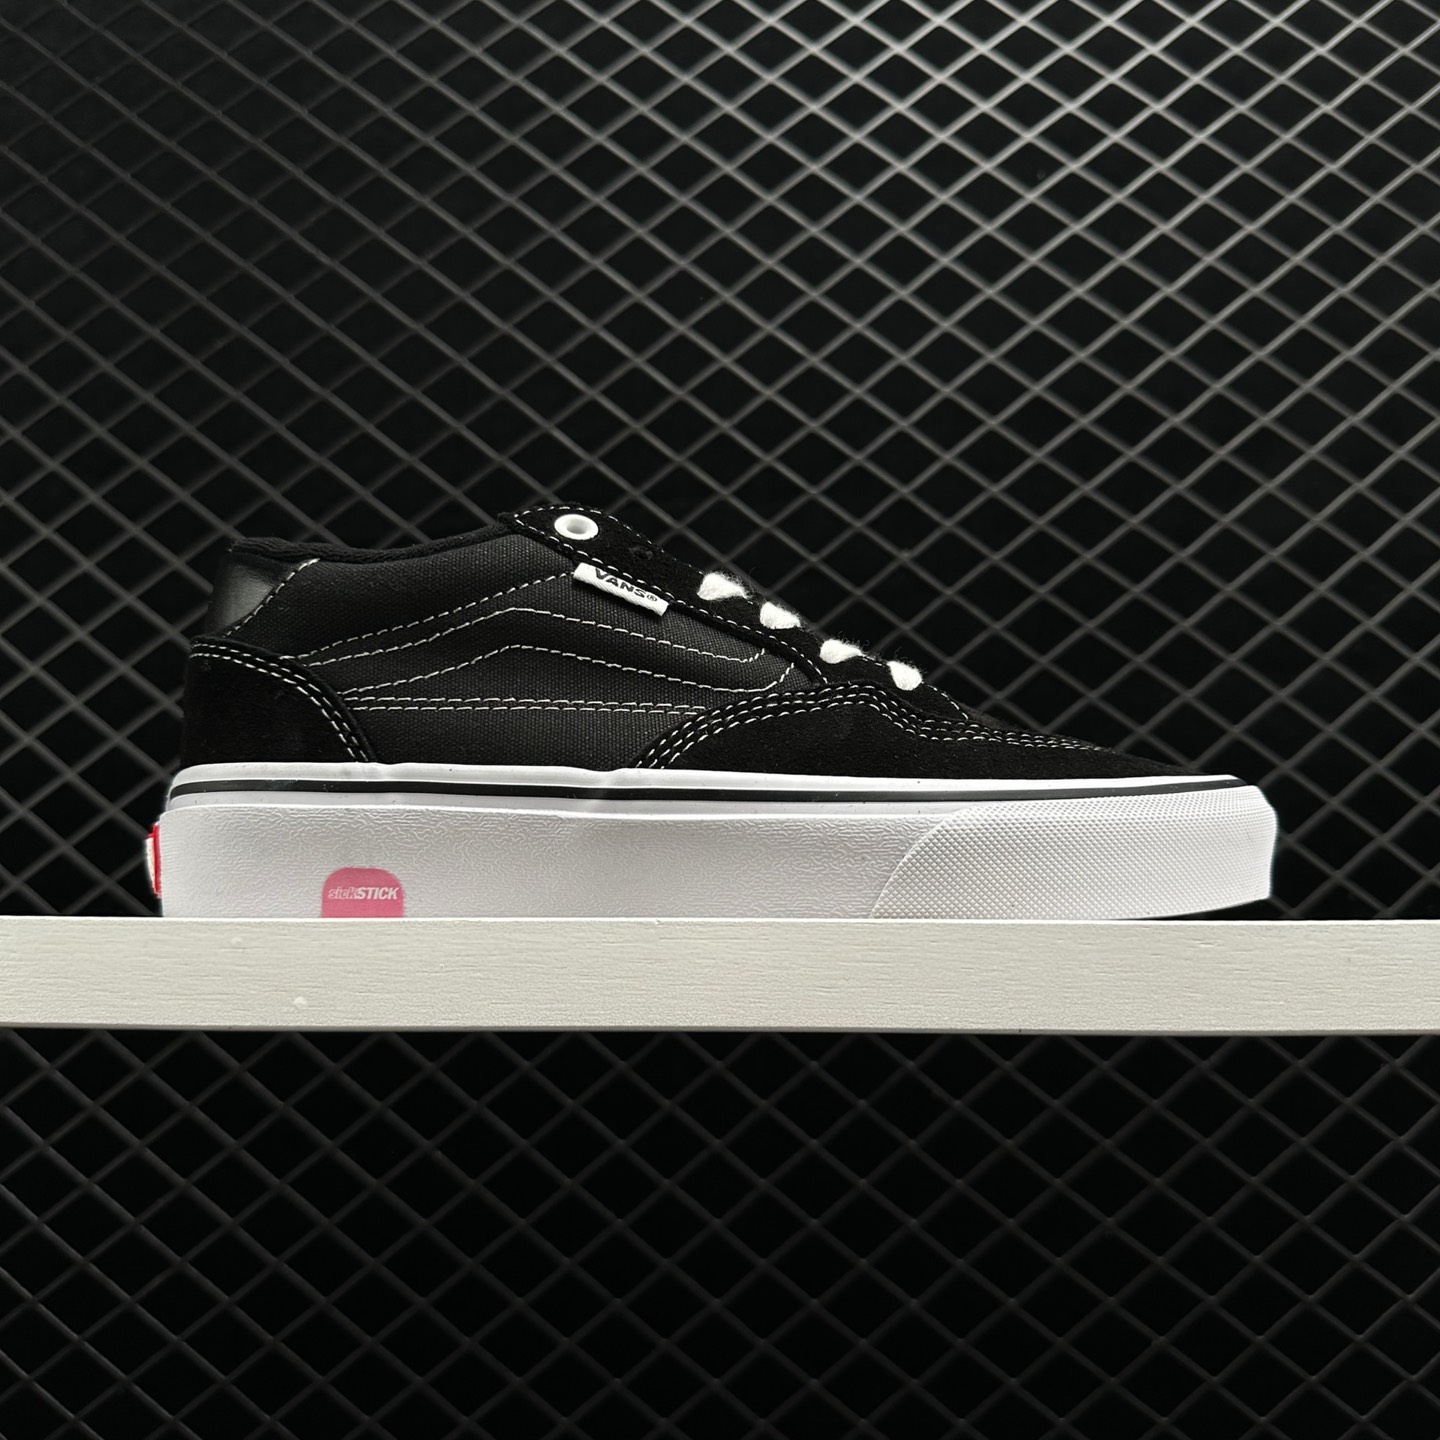 Vans Rowan Pro 'Black' Sneakers - Stylish and Versatile Skate Shoes